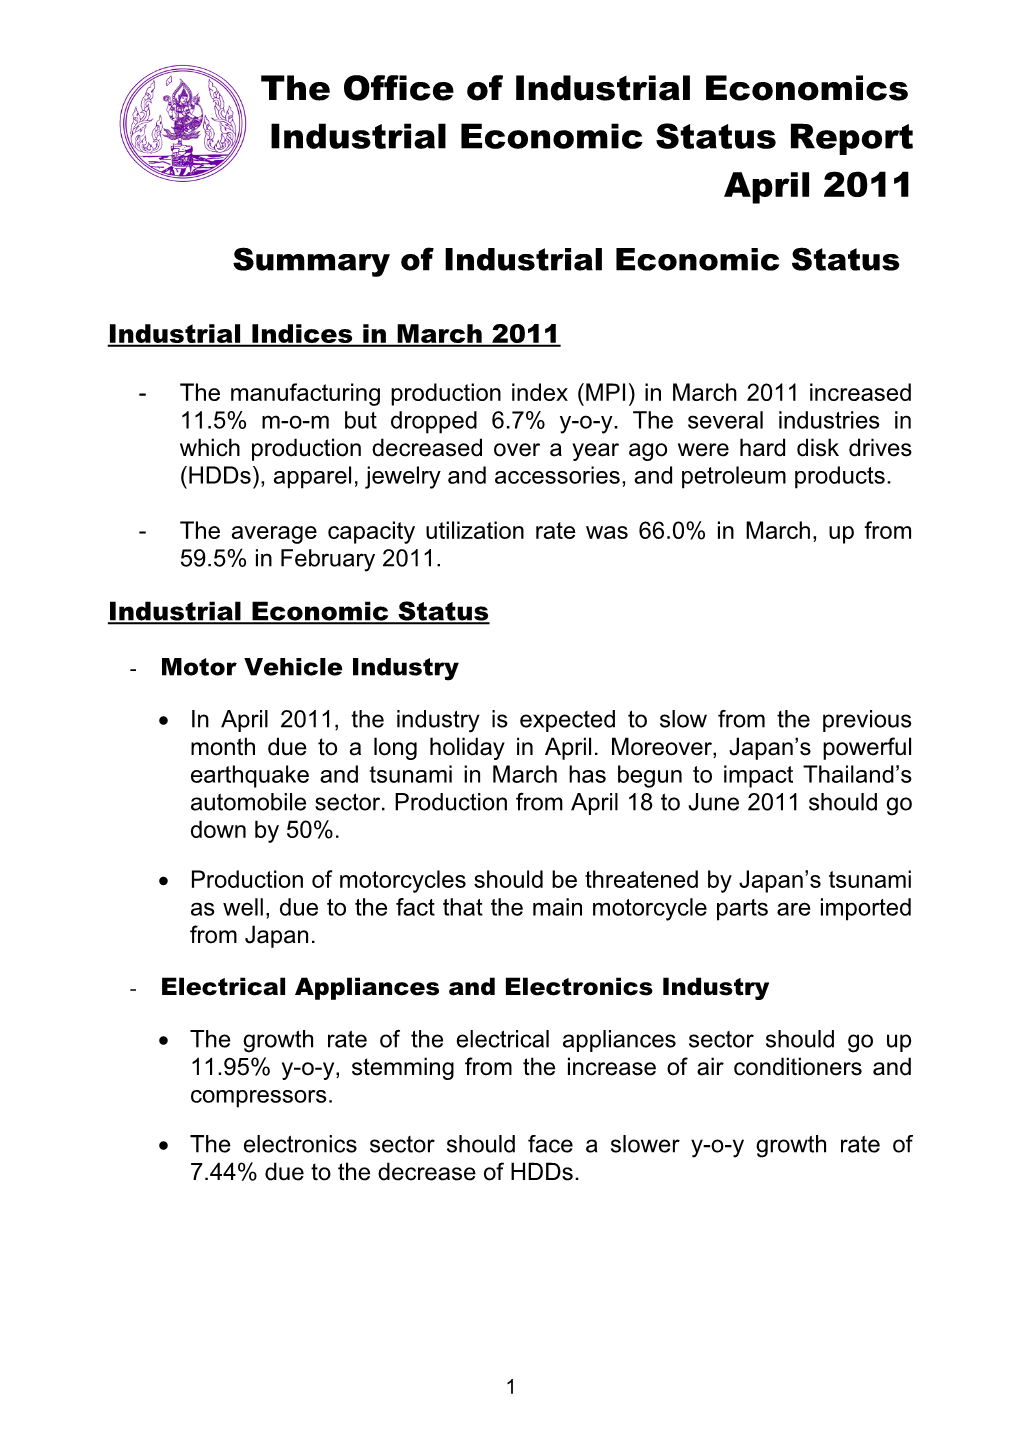 Summary of Industrial Economic Status s1